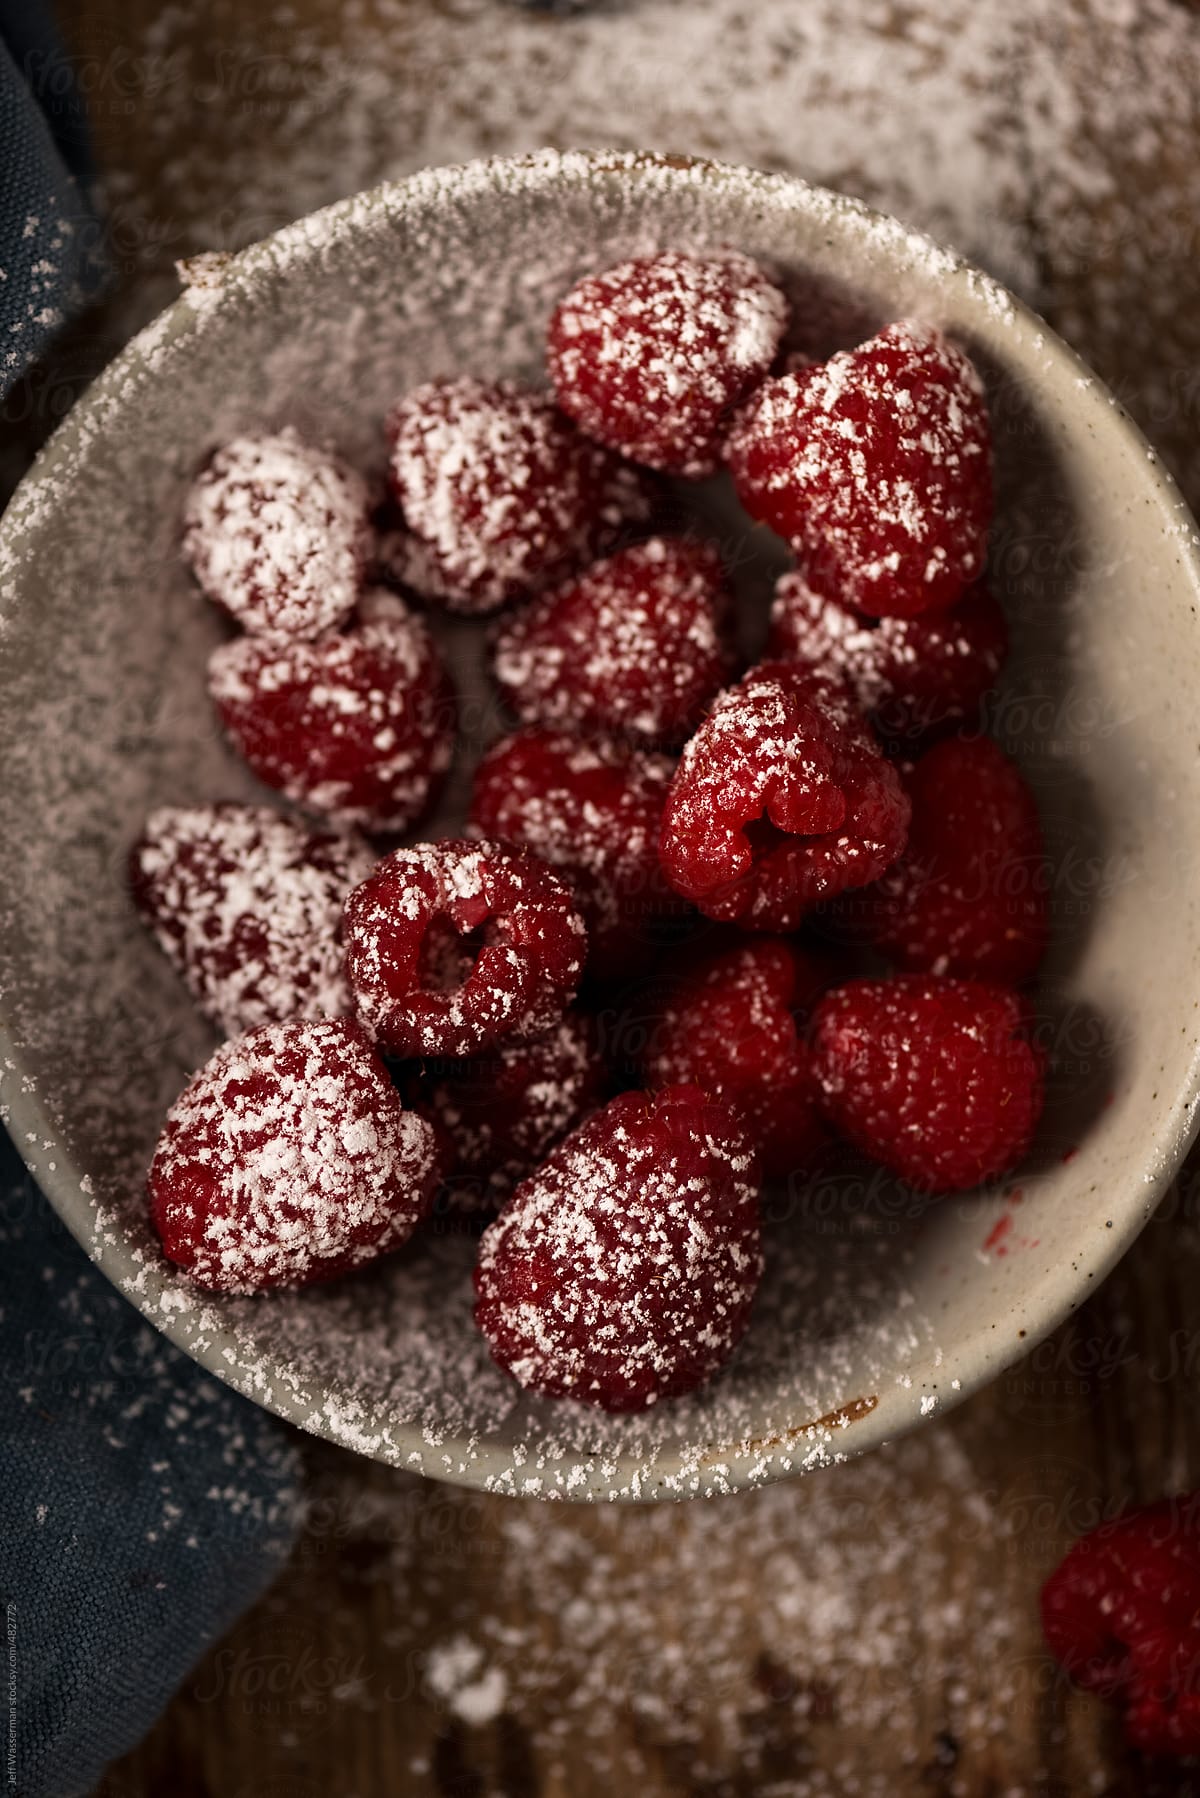 Raspberries Covered in Icing Sugar